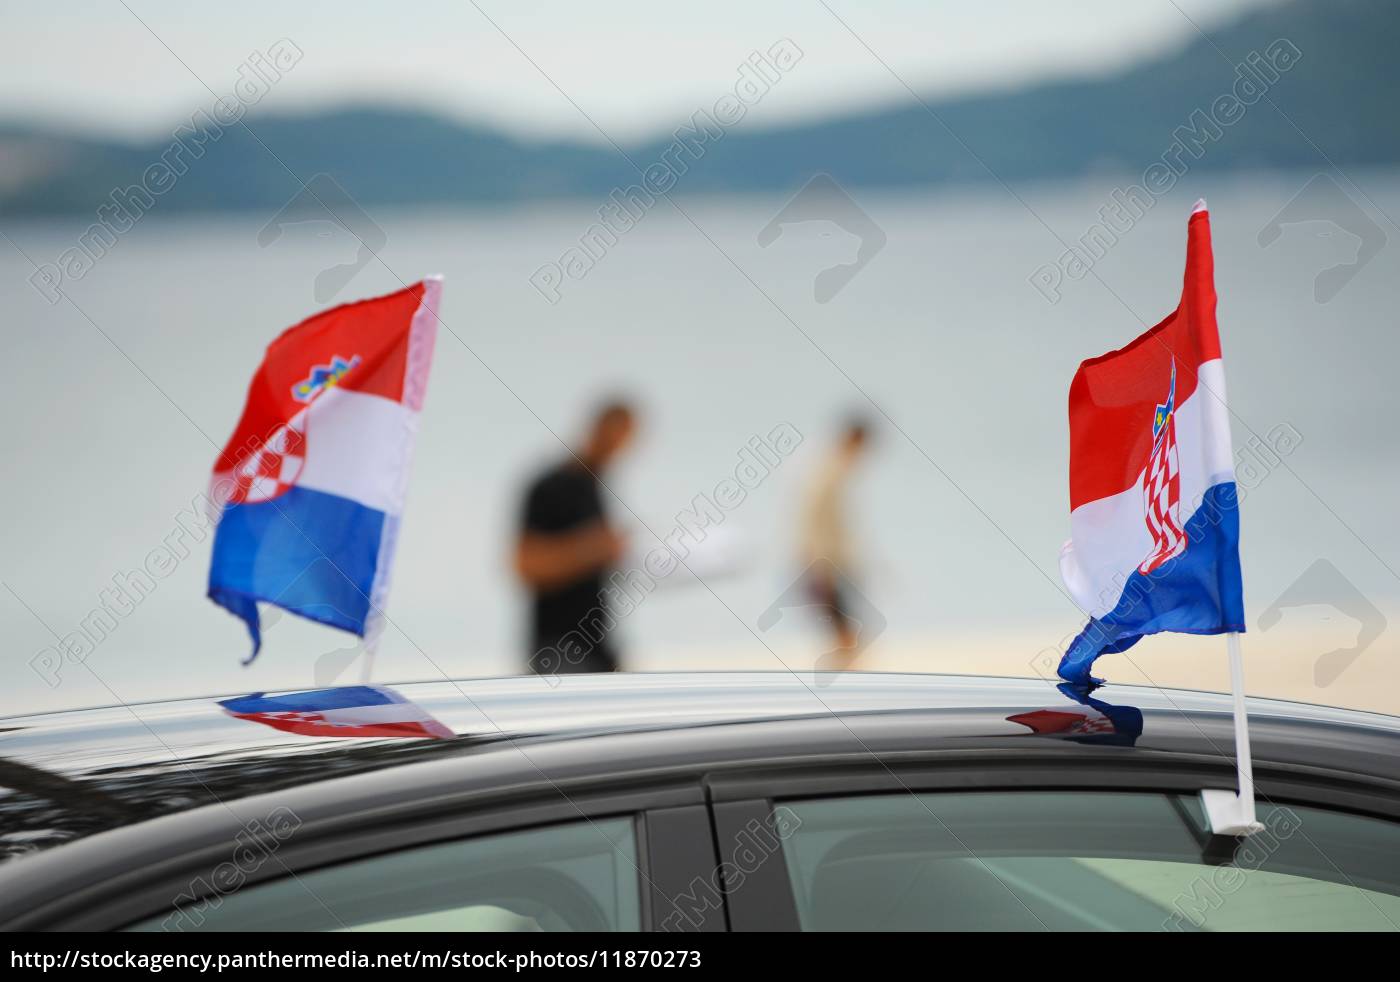 Kroatische Flagge an Autofenster befestigt - Lizenzfreies Bild